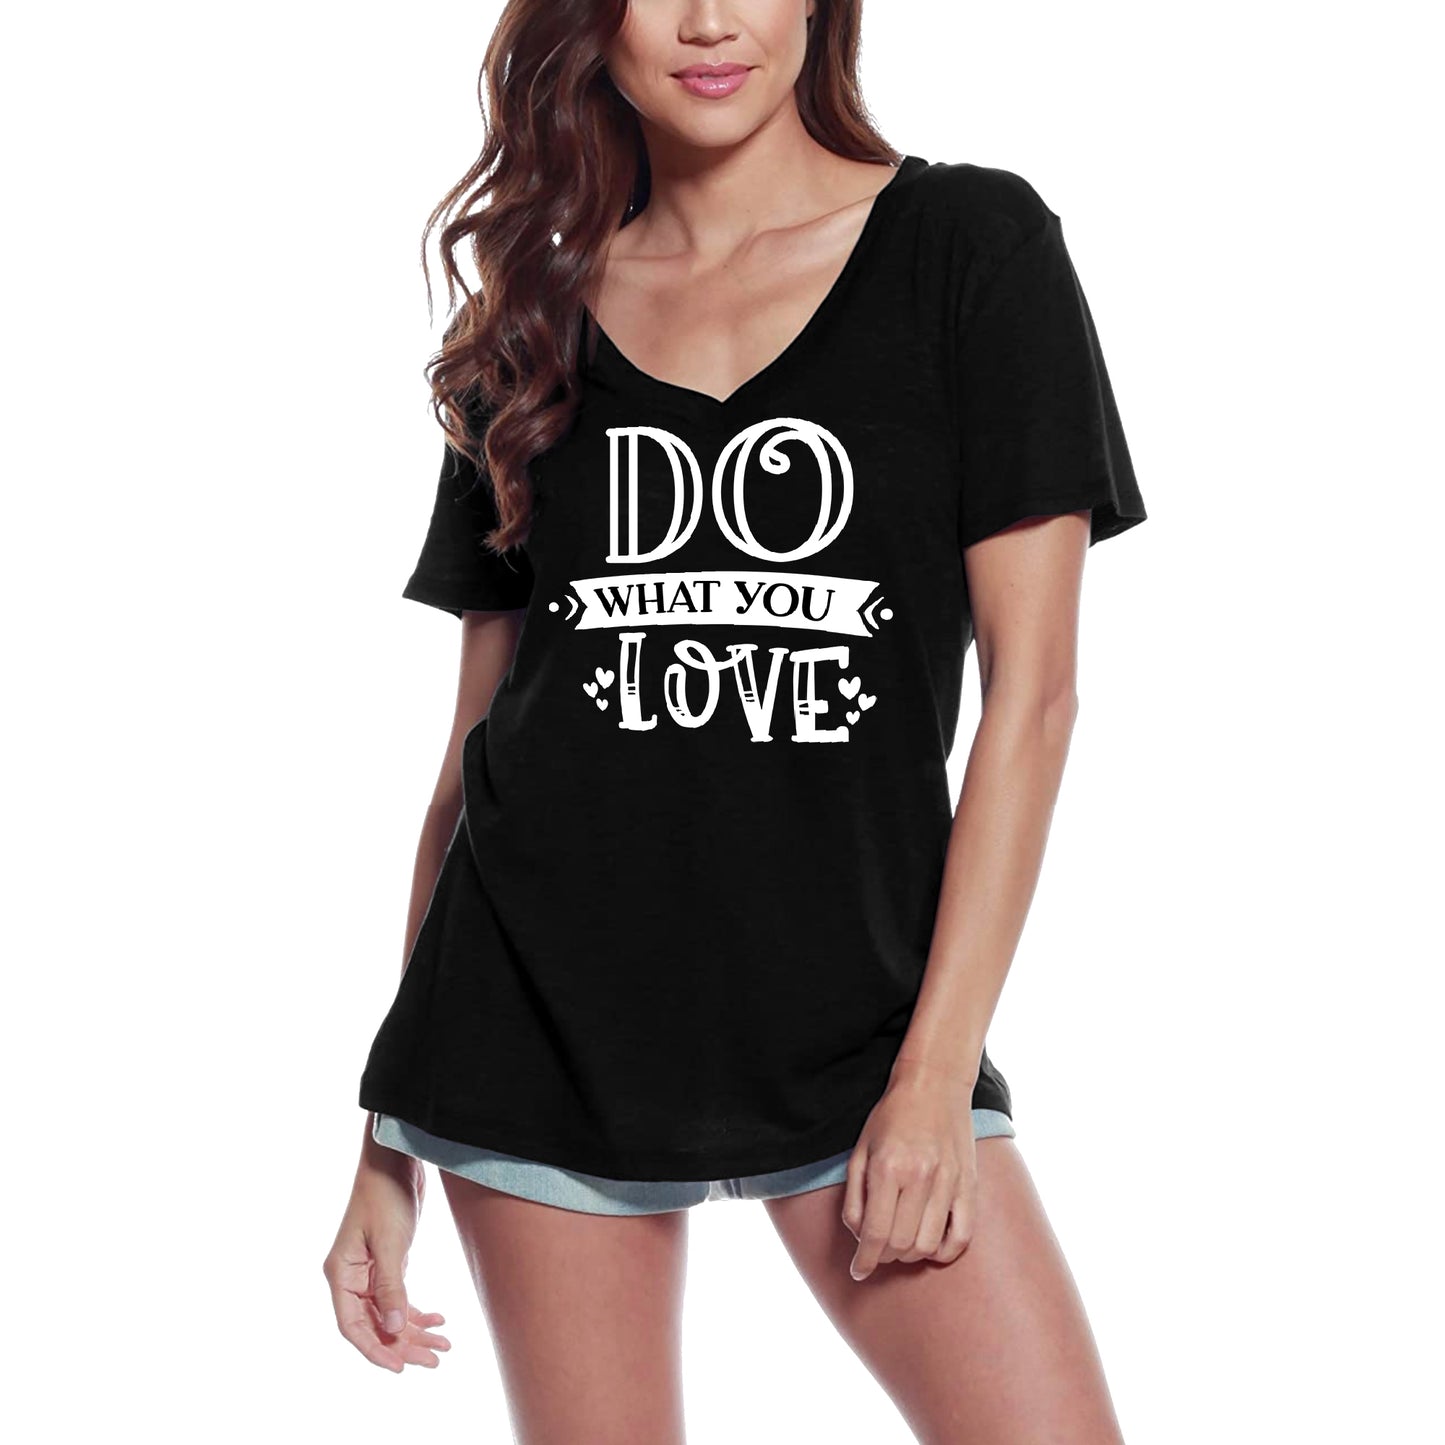 ULTRABASIC Women's T-Shirt Do What You Love - Short Sleeve Tee Shirt Tops